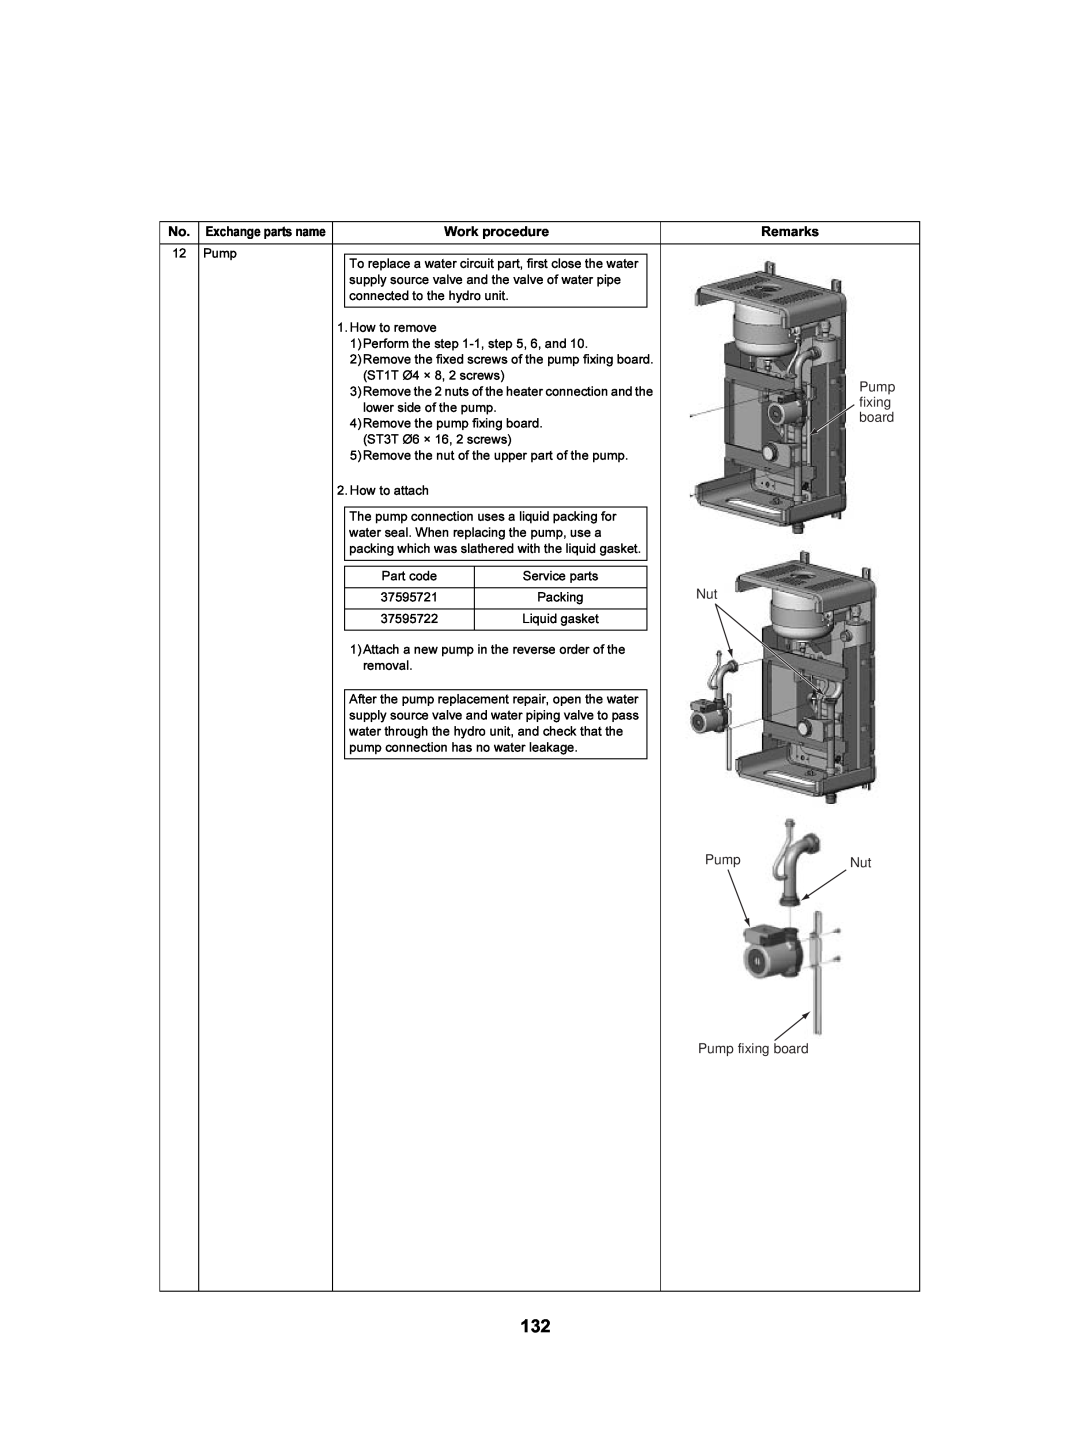 Toshiba HWS-3001CSHM3-E(-UK), HWS-802XWHT6-E, HWS-802H-E Work procedure, Remarks, PumpNut Pump fixing board 